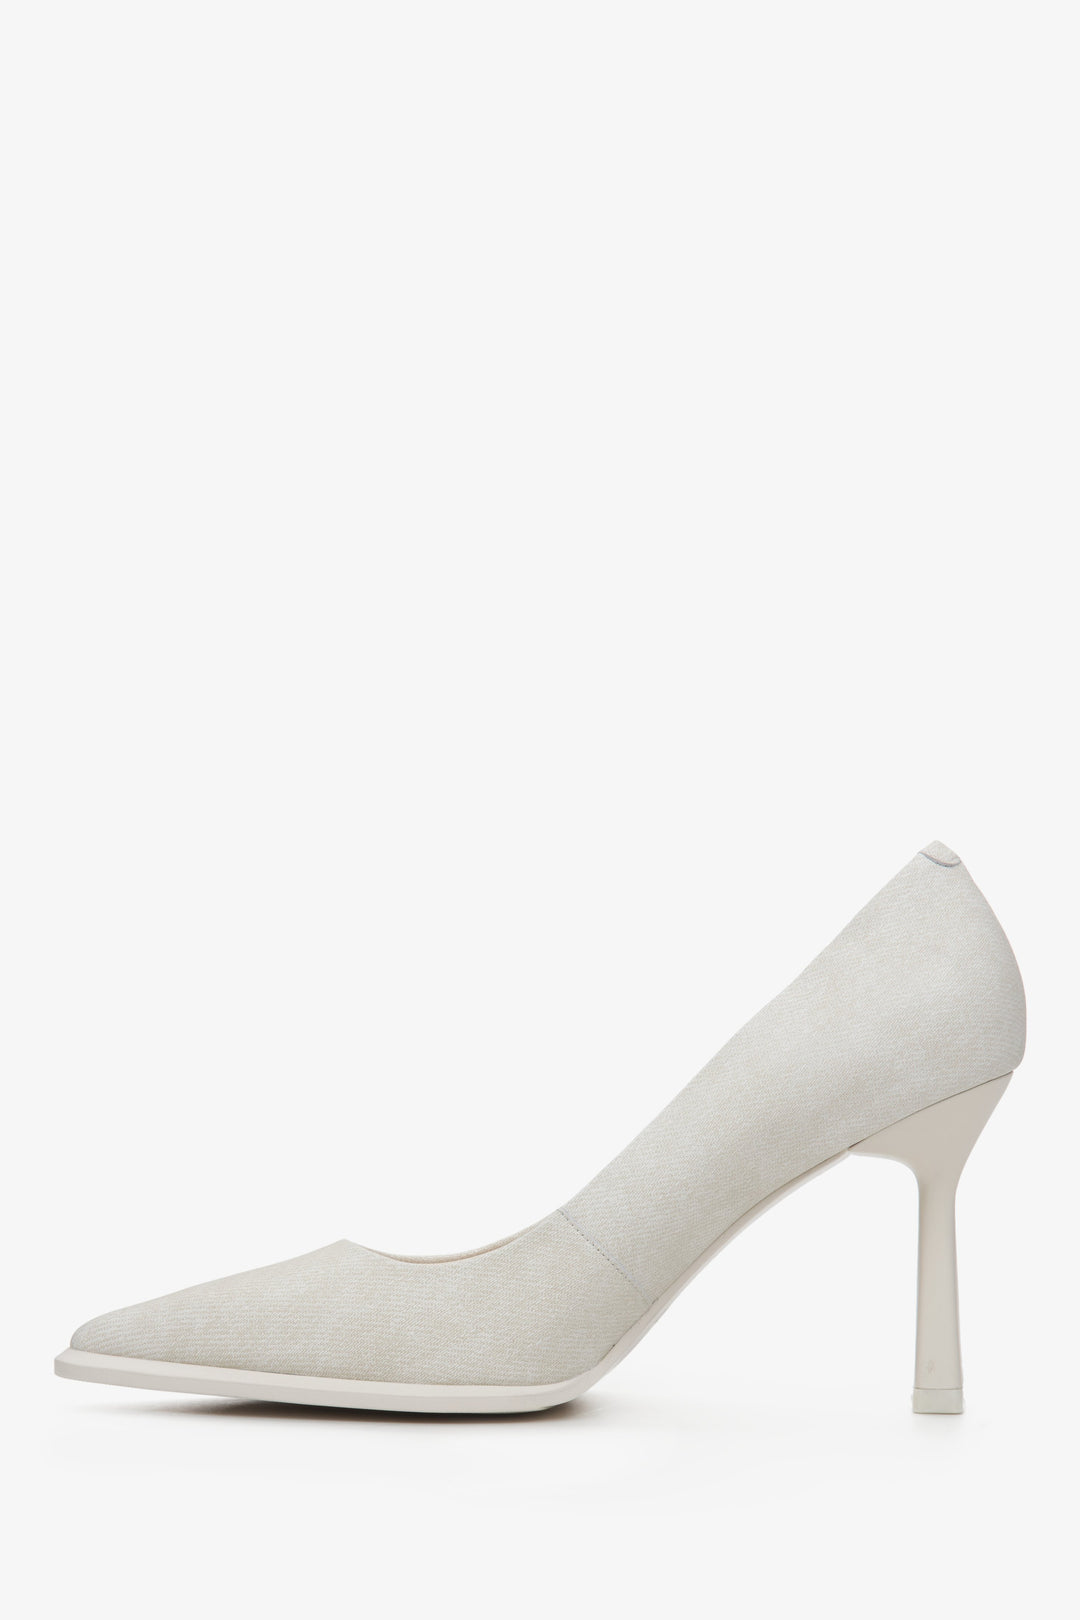 Women's light beige denim pumps by Estro - shoe profile.